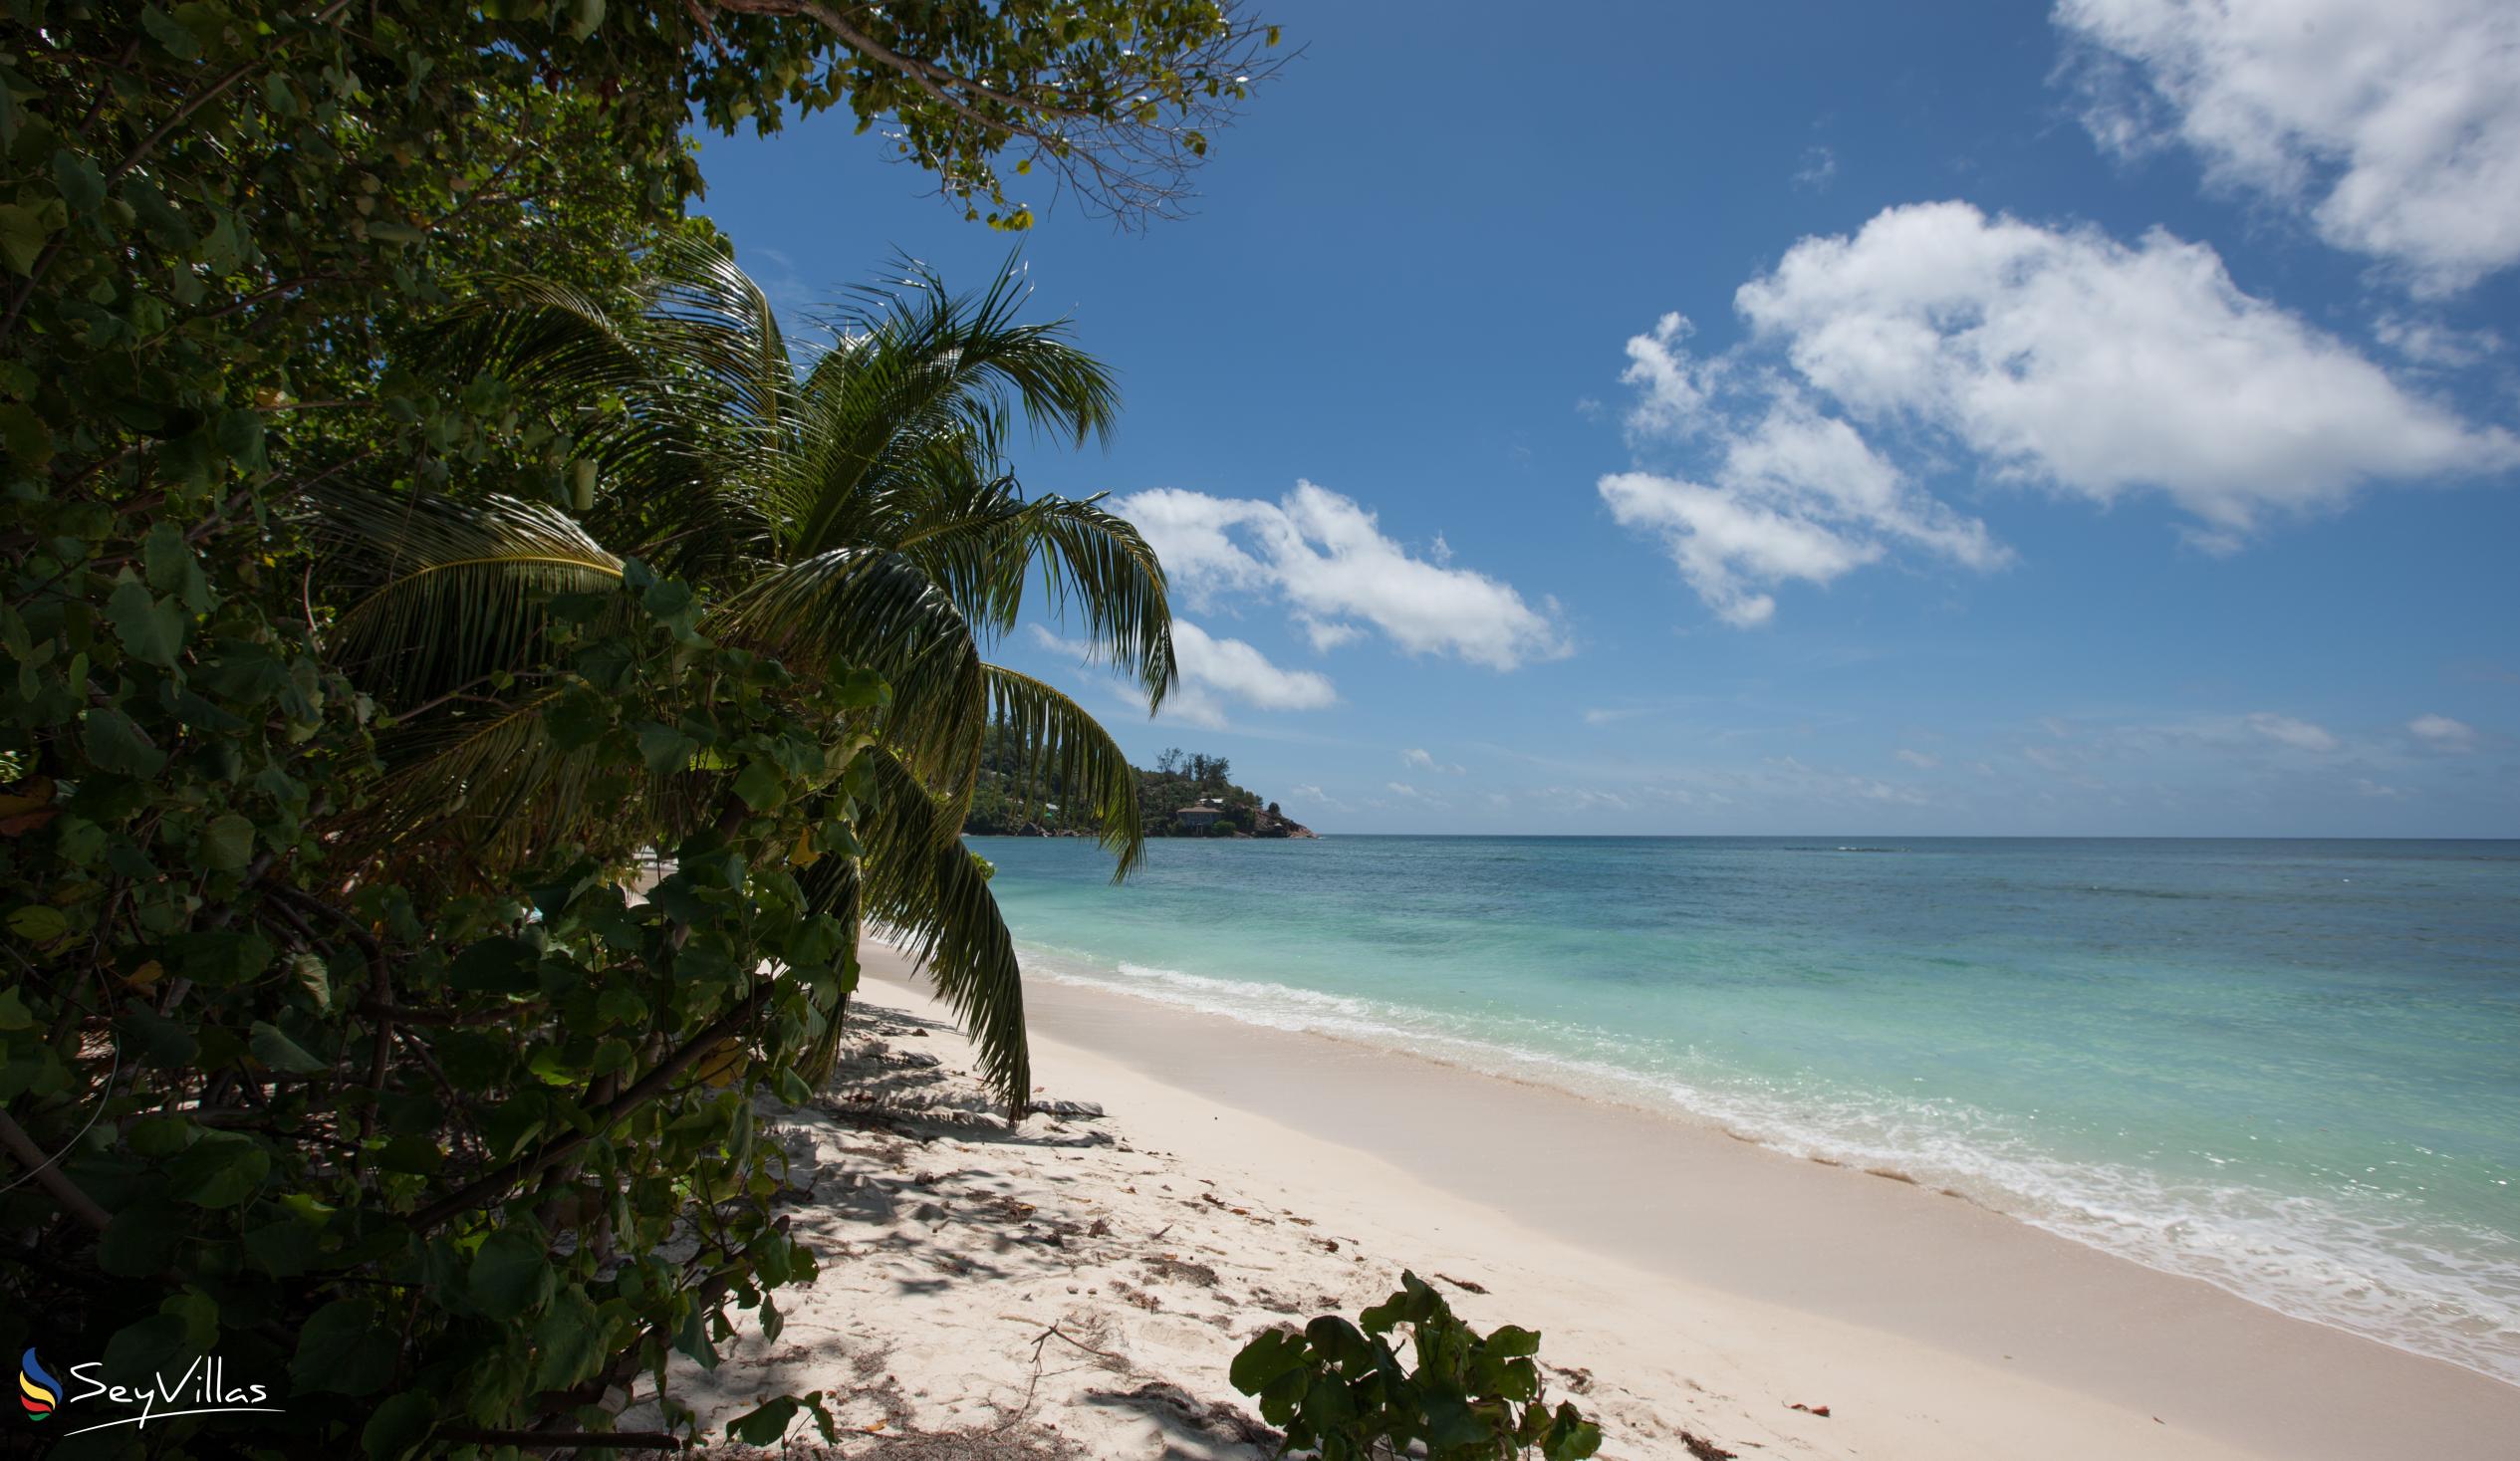 Foto 23: Tranquility Villa - Plages - Praslin (Seychelles)